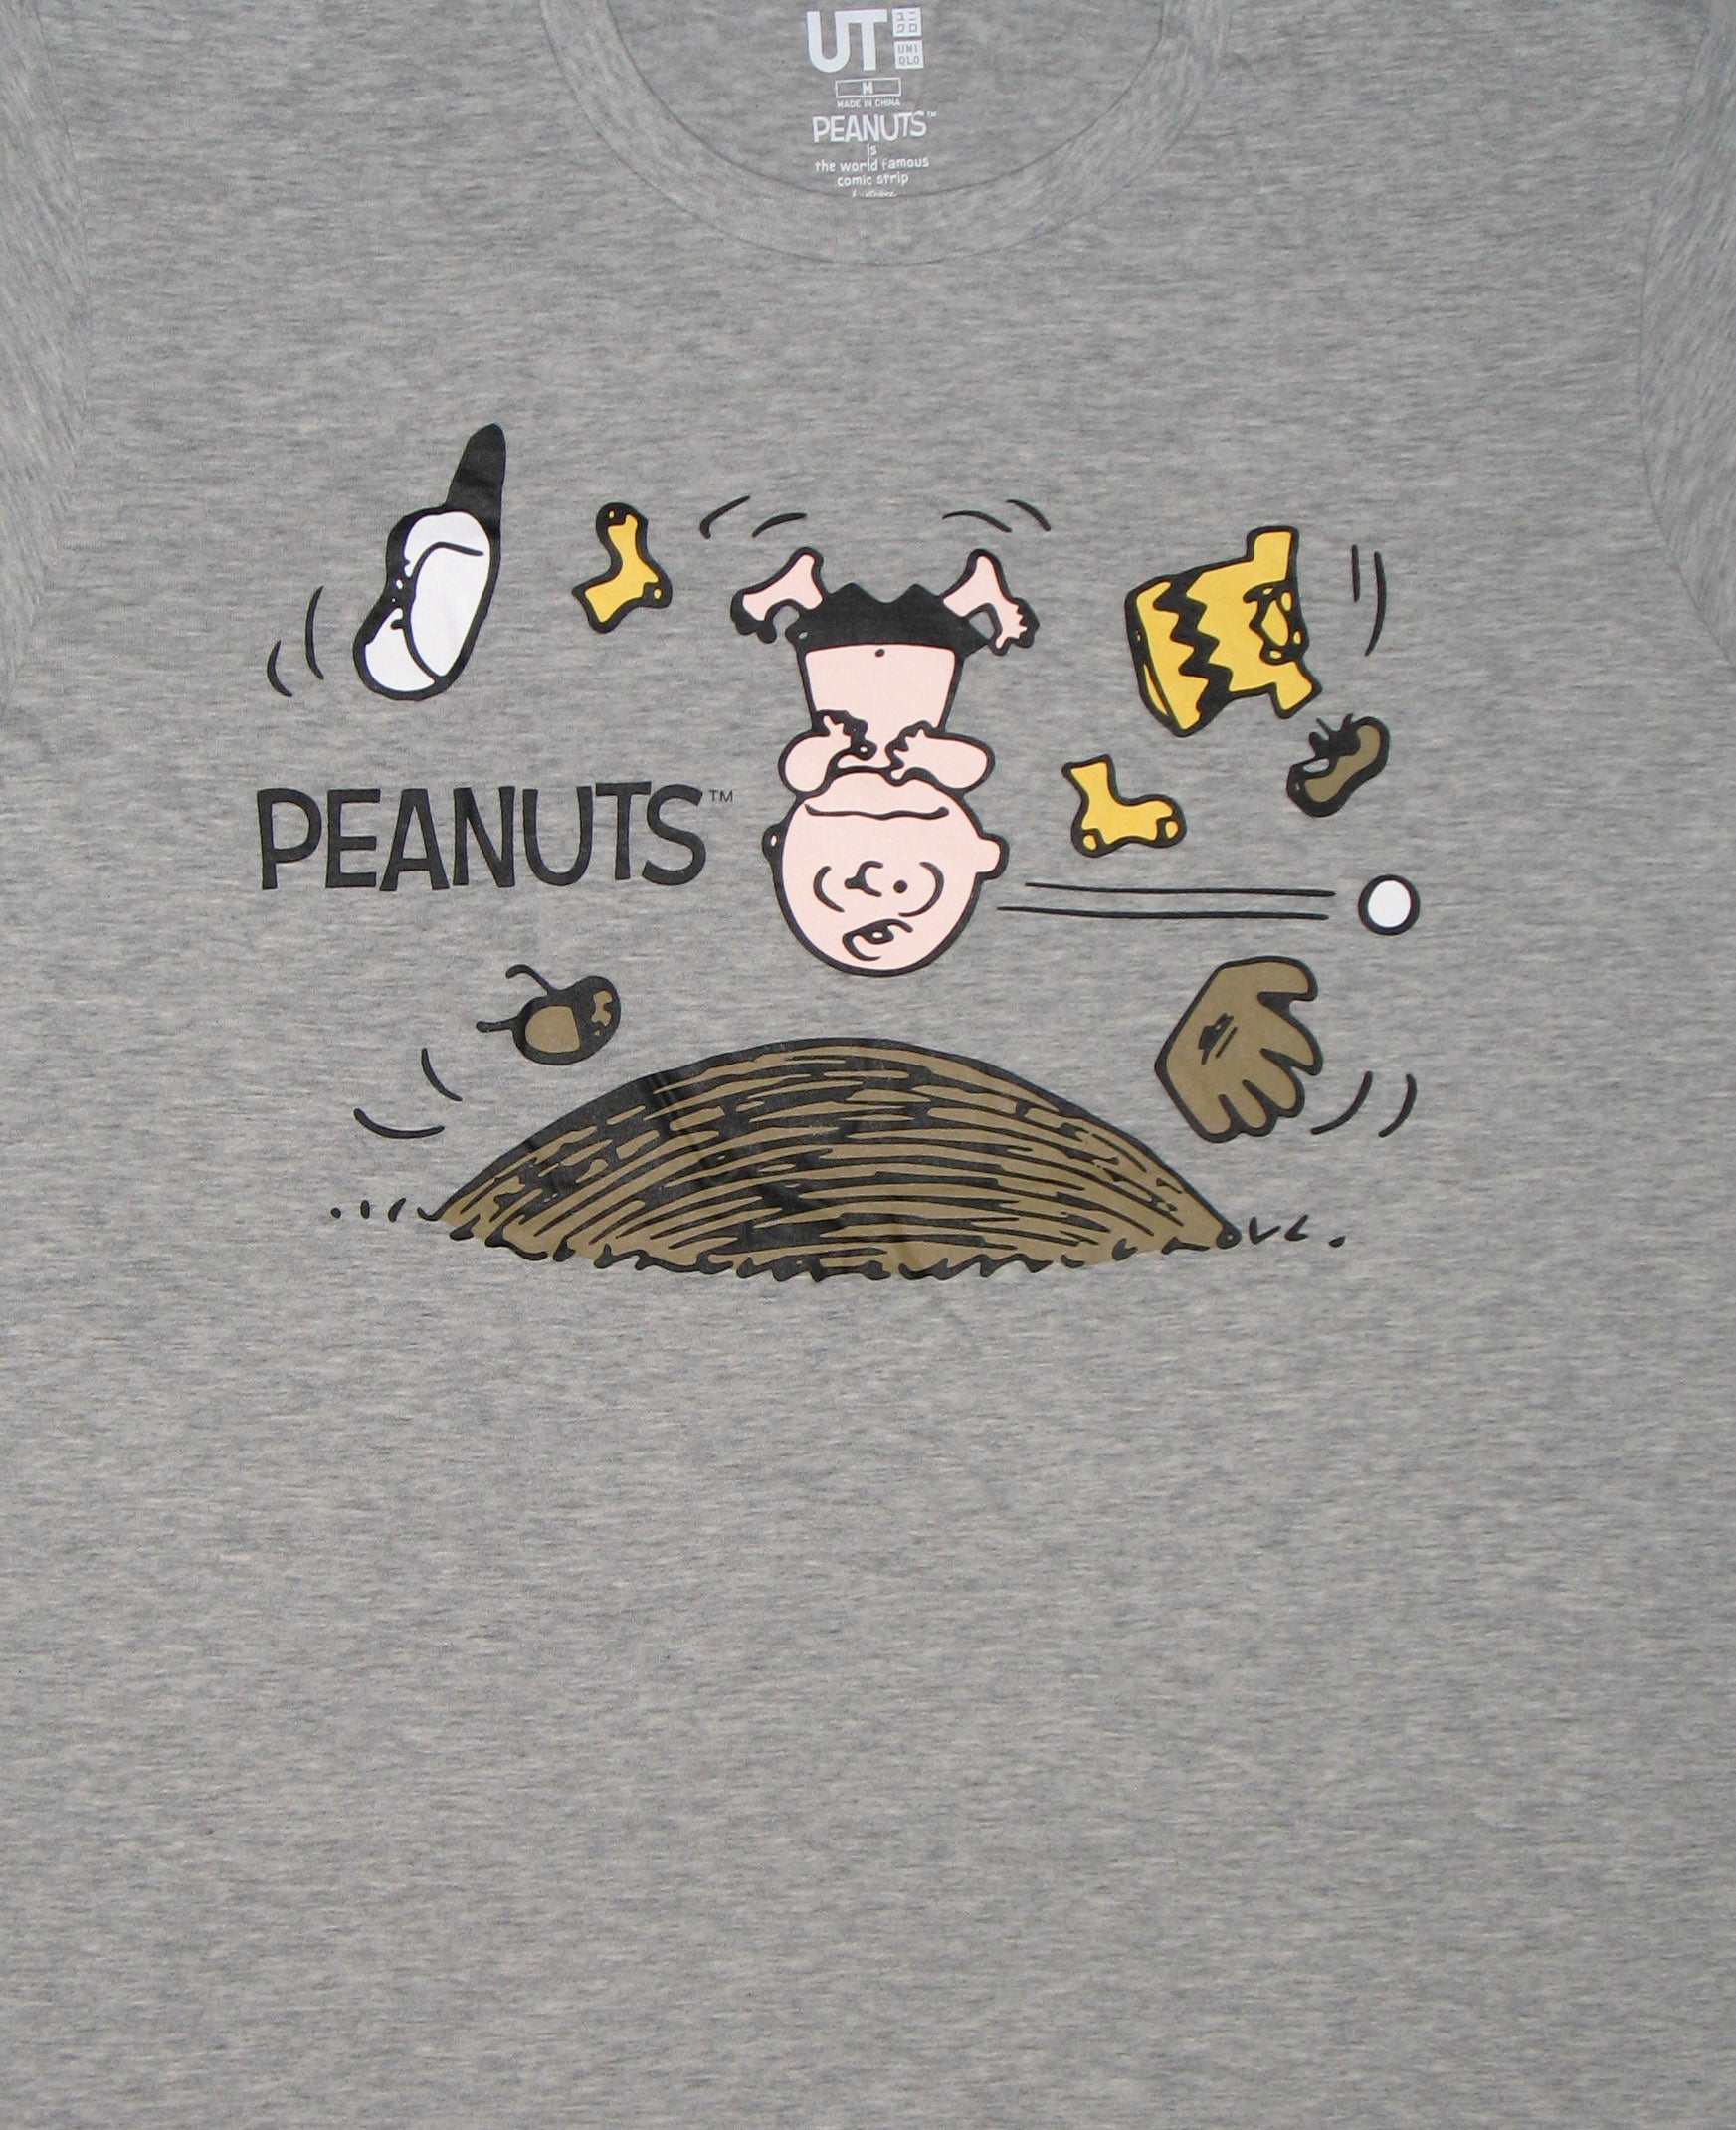 MLB New York Yankees Snoopy Charlie Brown Woodstock The Peanuts Movie  Baseball T Shirt - Rookbrand